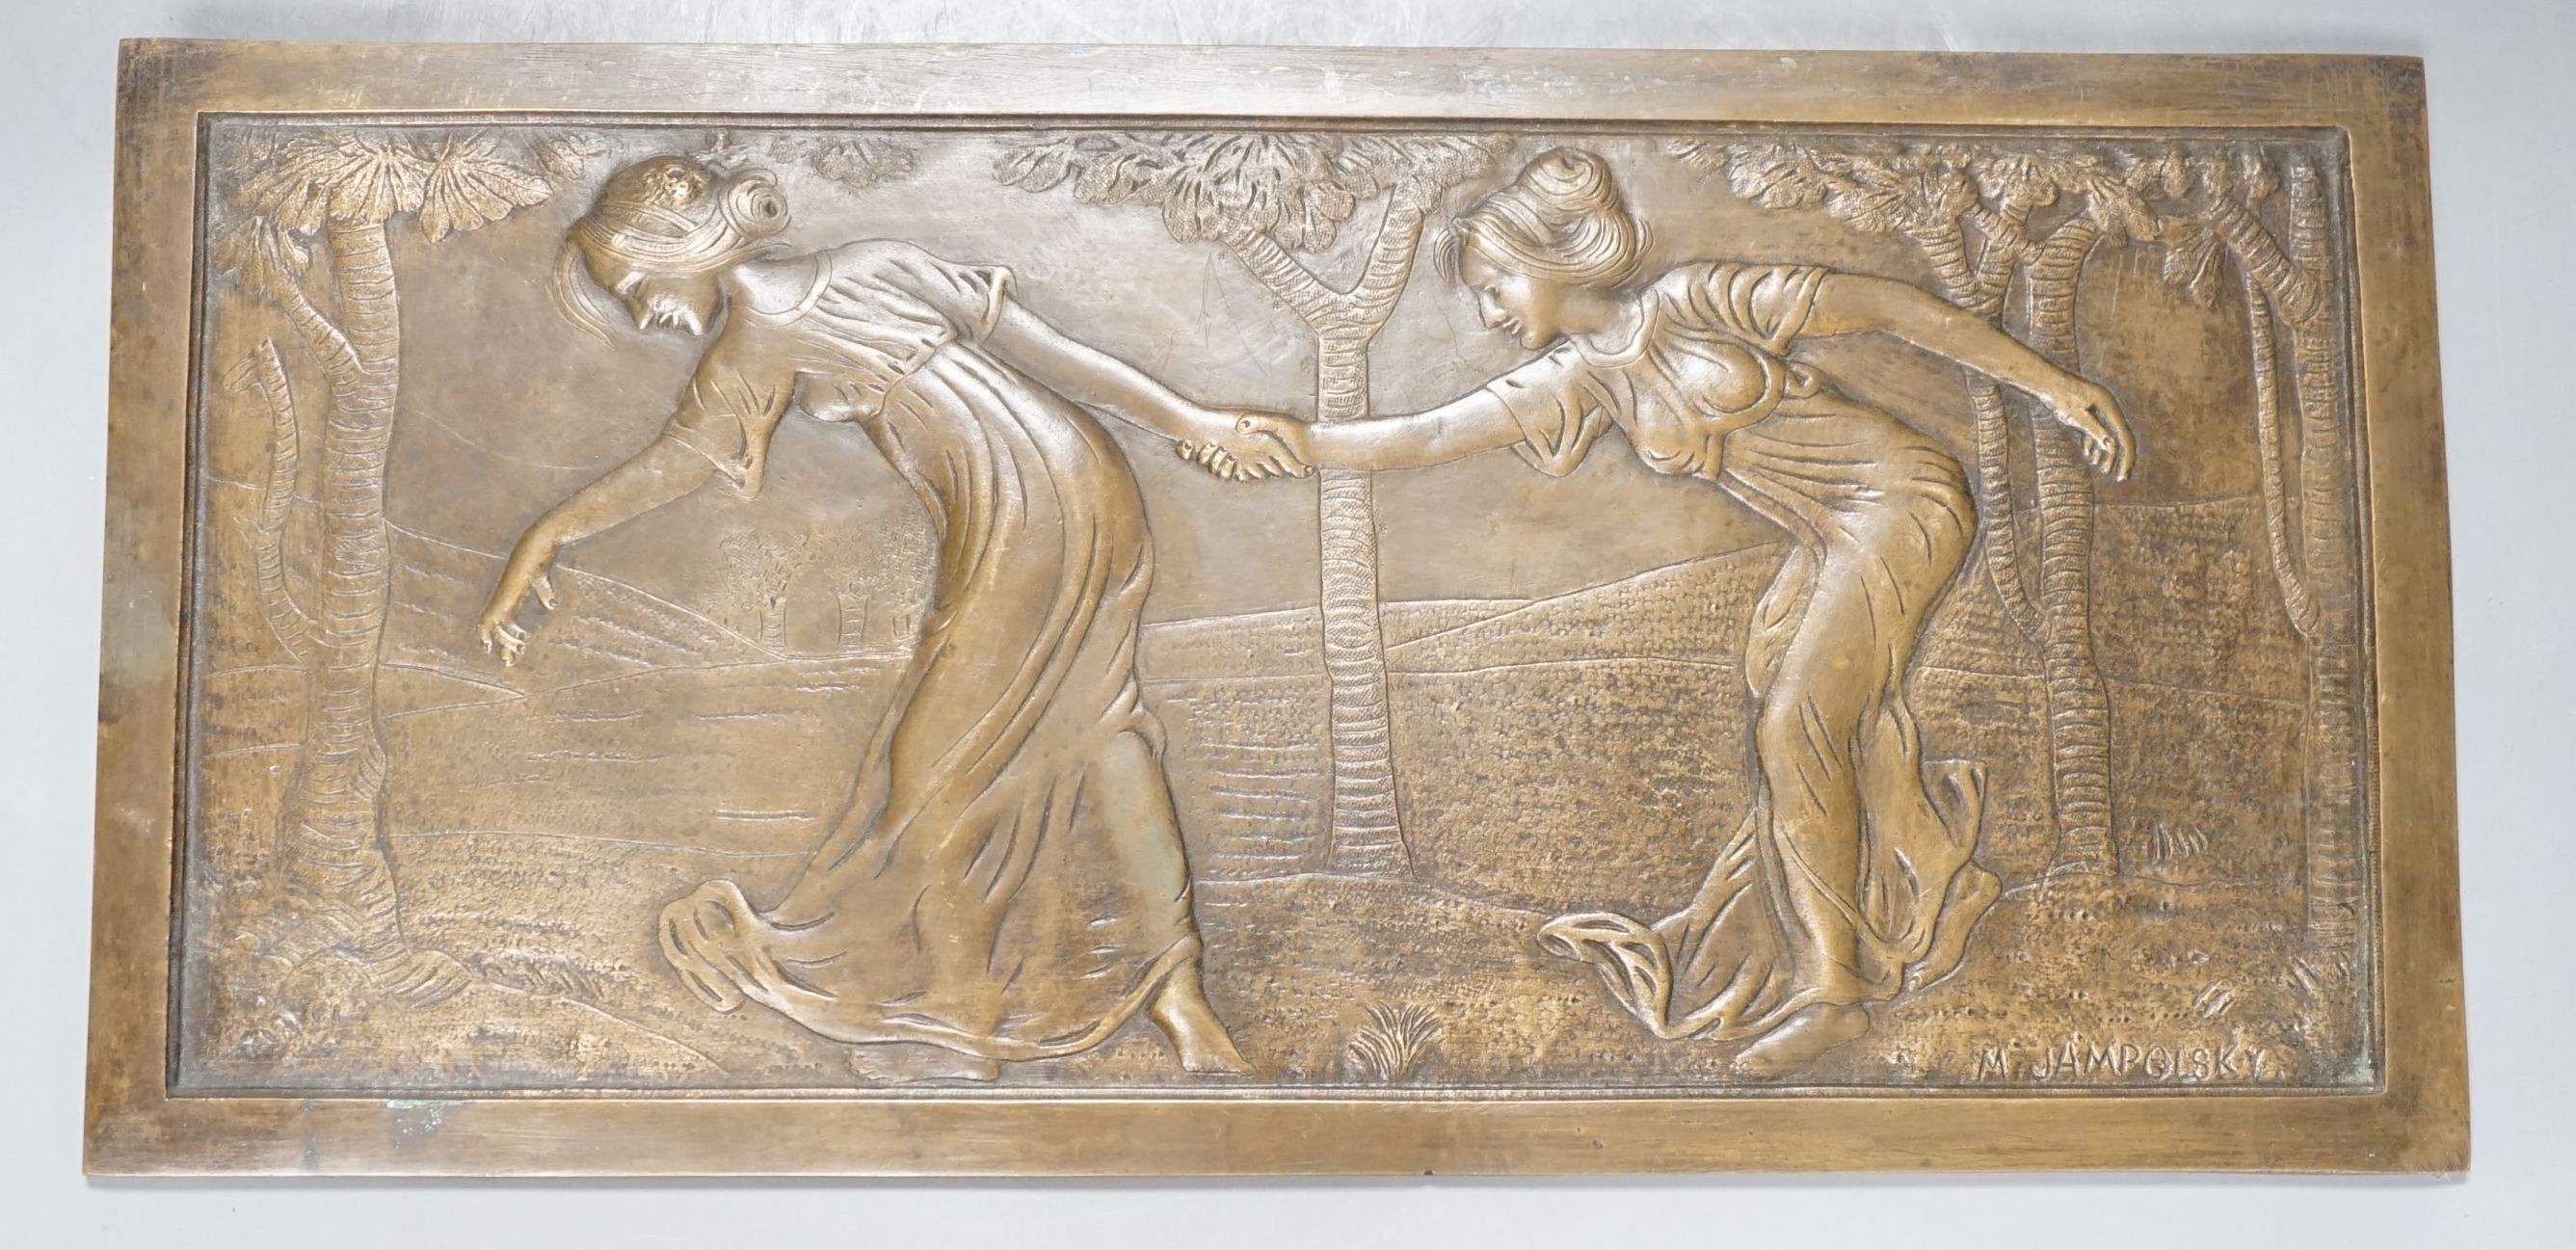 A signed M Jampolsky, Art Nouveau rectangular figural bronze plaque, 36.5 cms wide x 8 cms high.